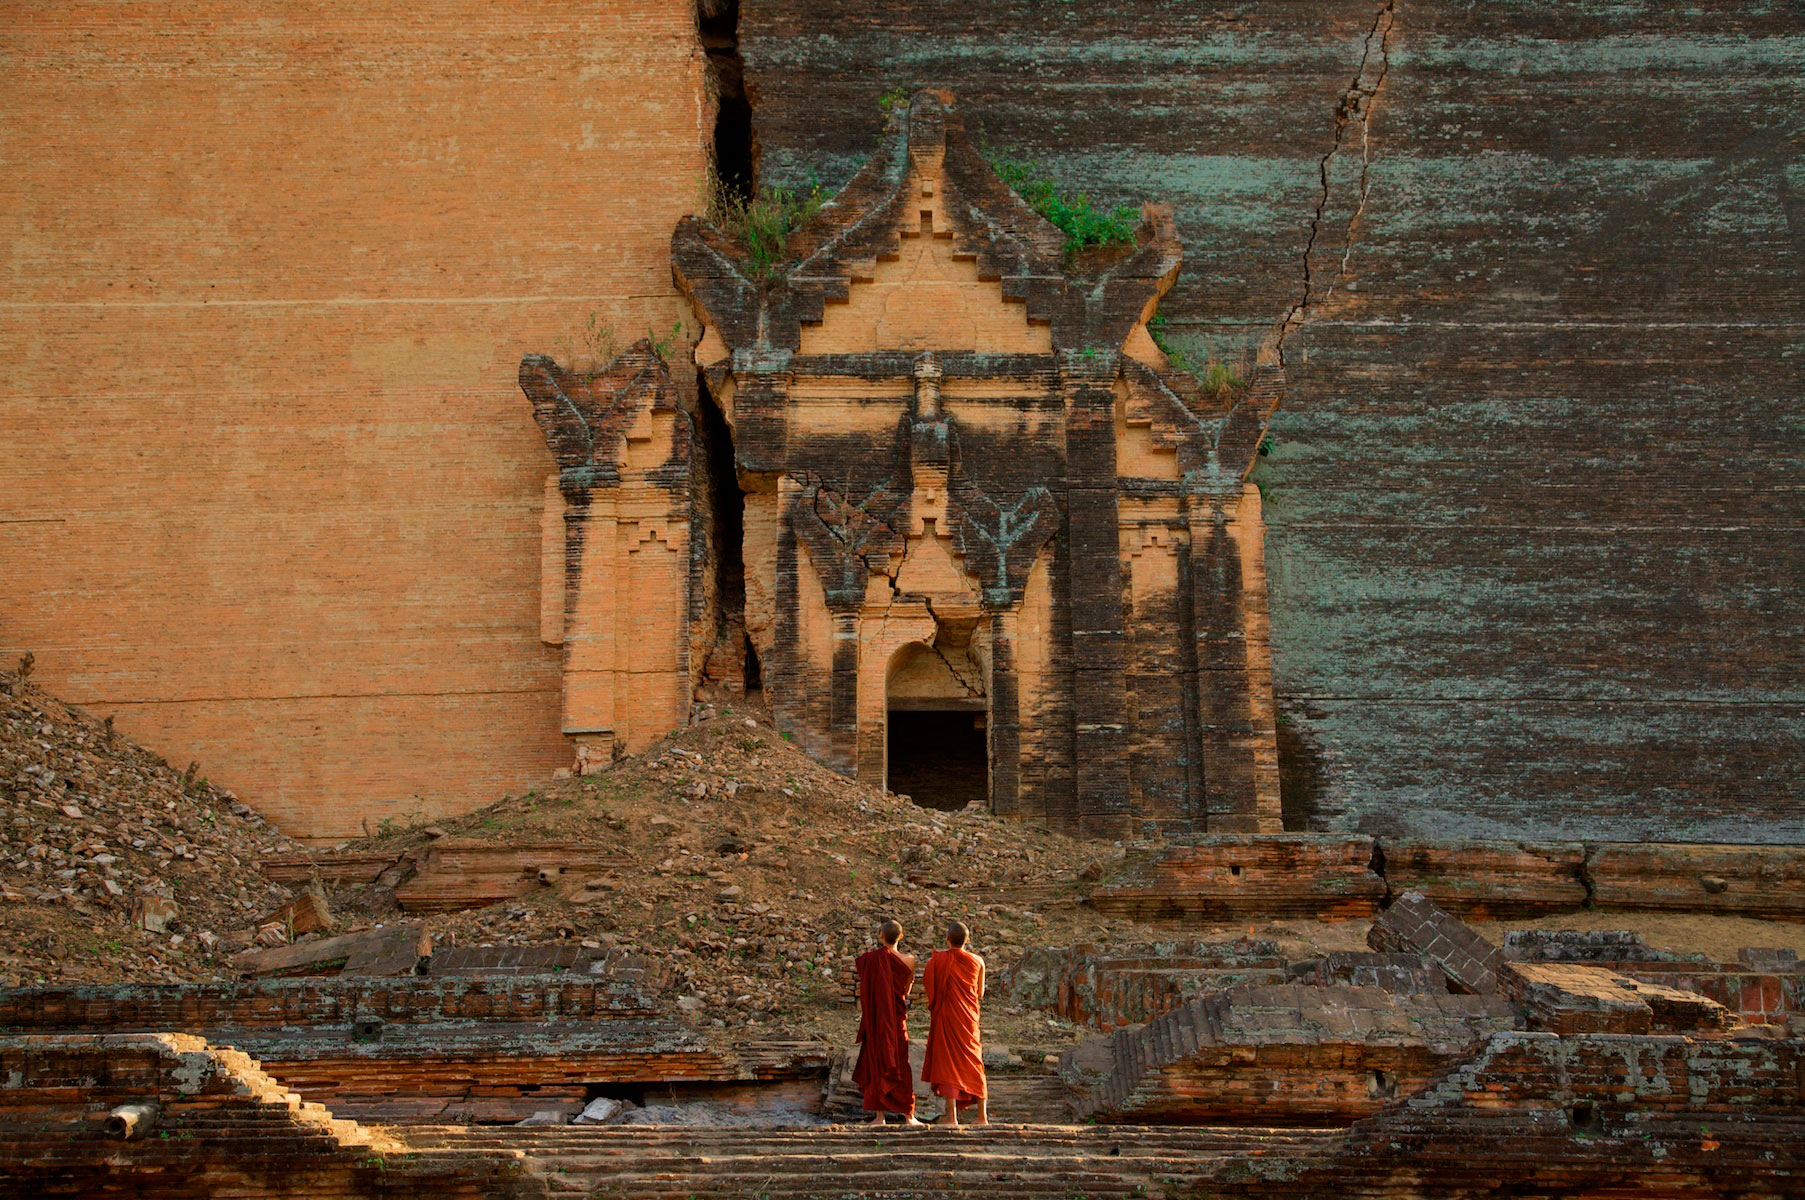 Mingun Pagoda, Mandalay, Burma